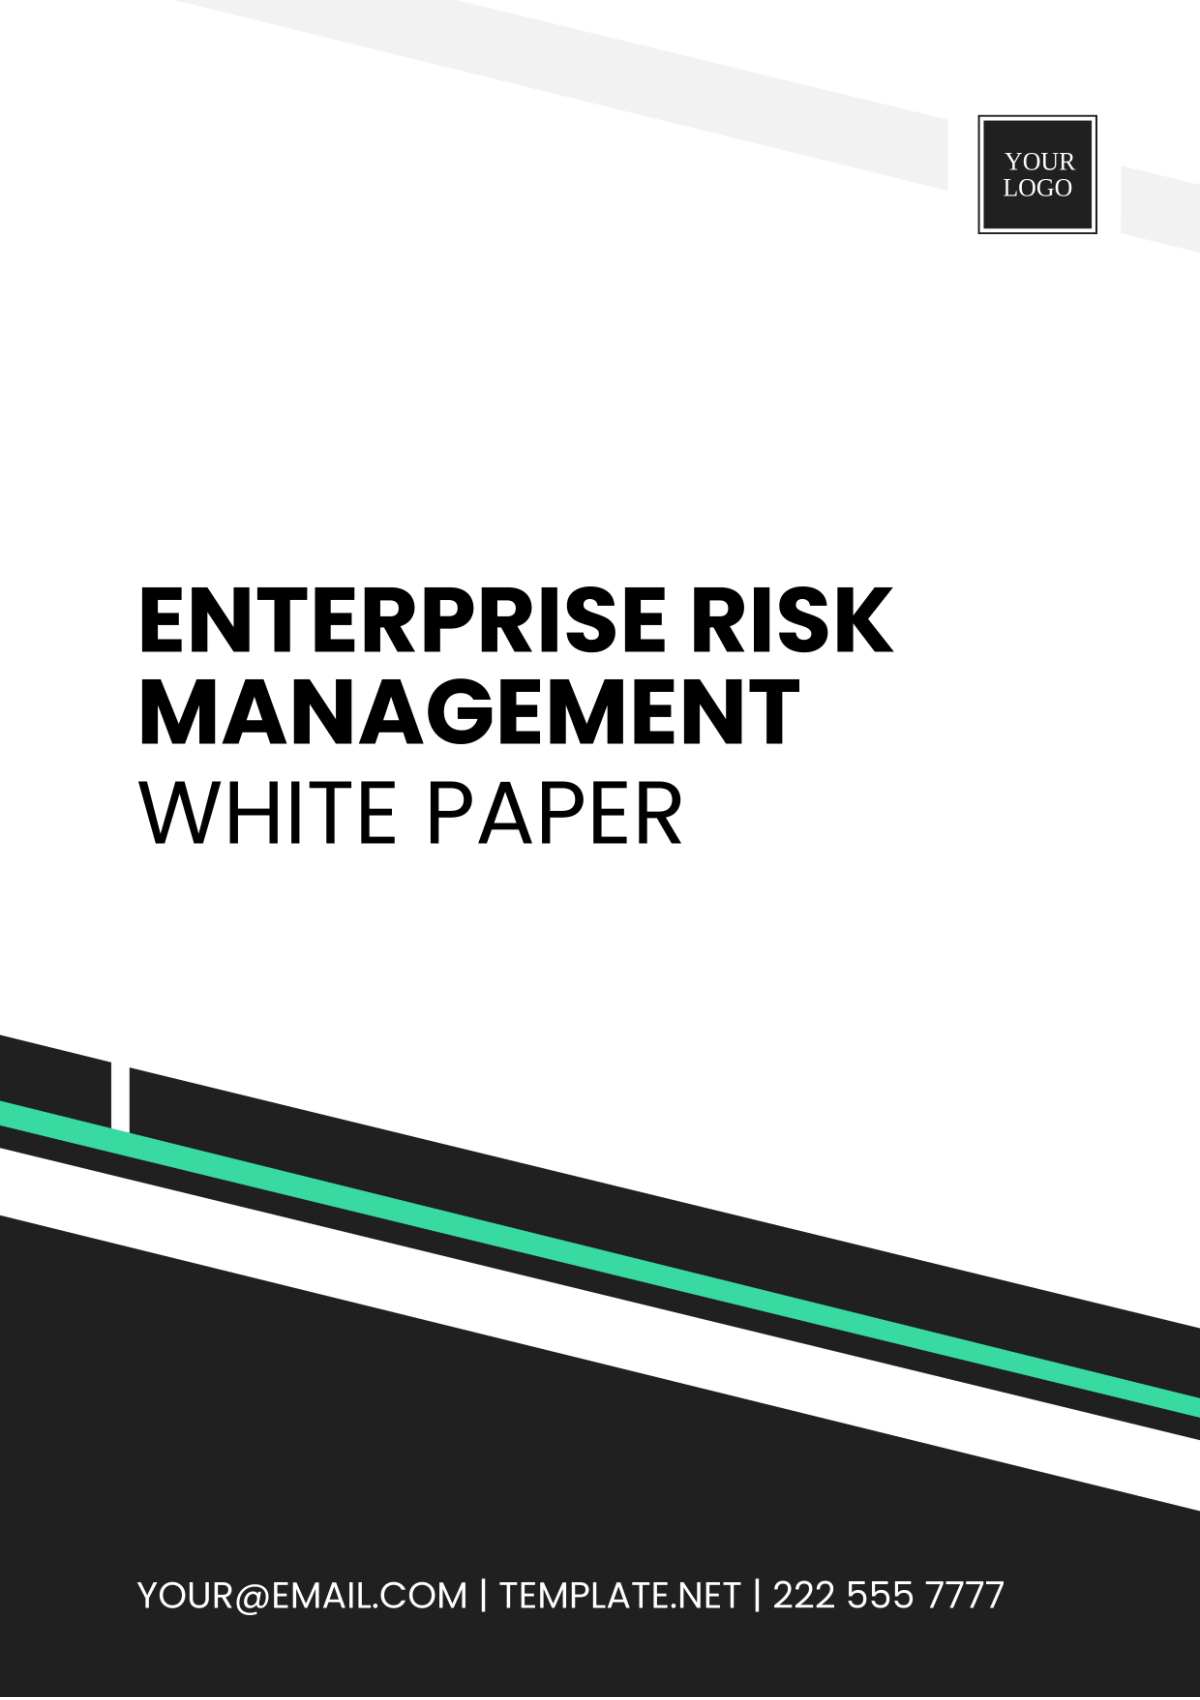 Enterprise Risk Management White Paper Template